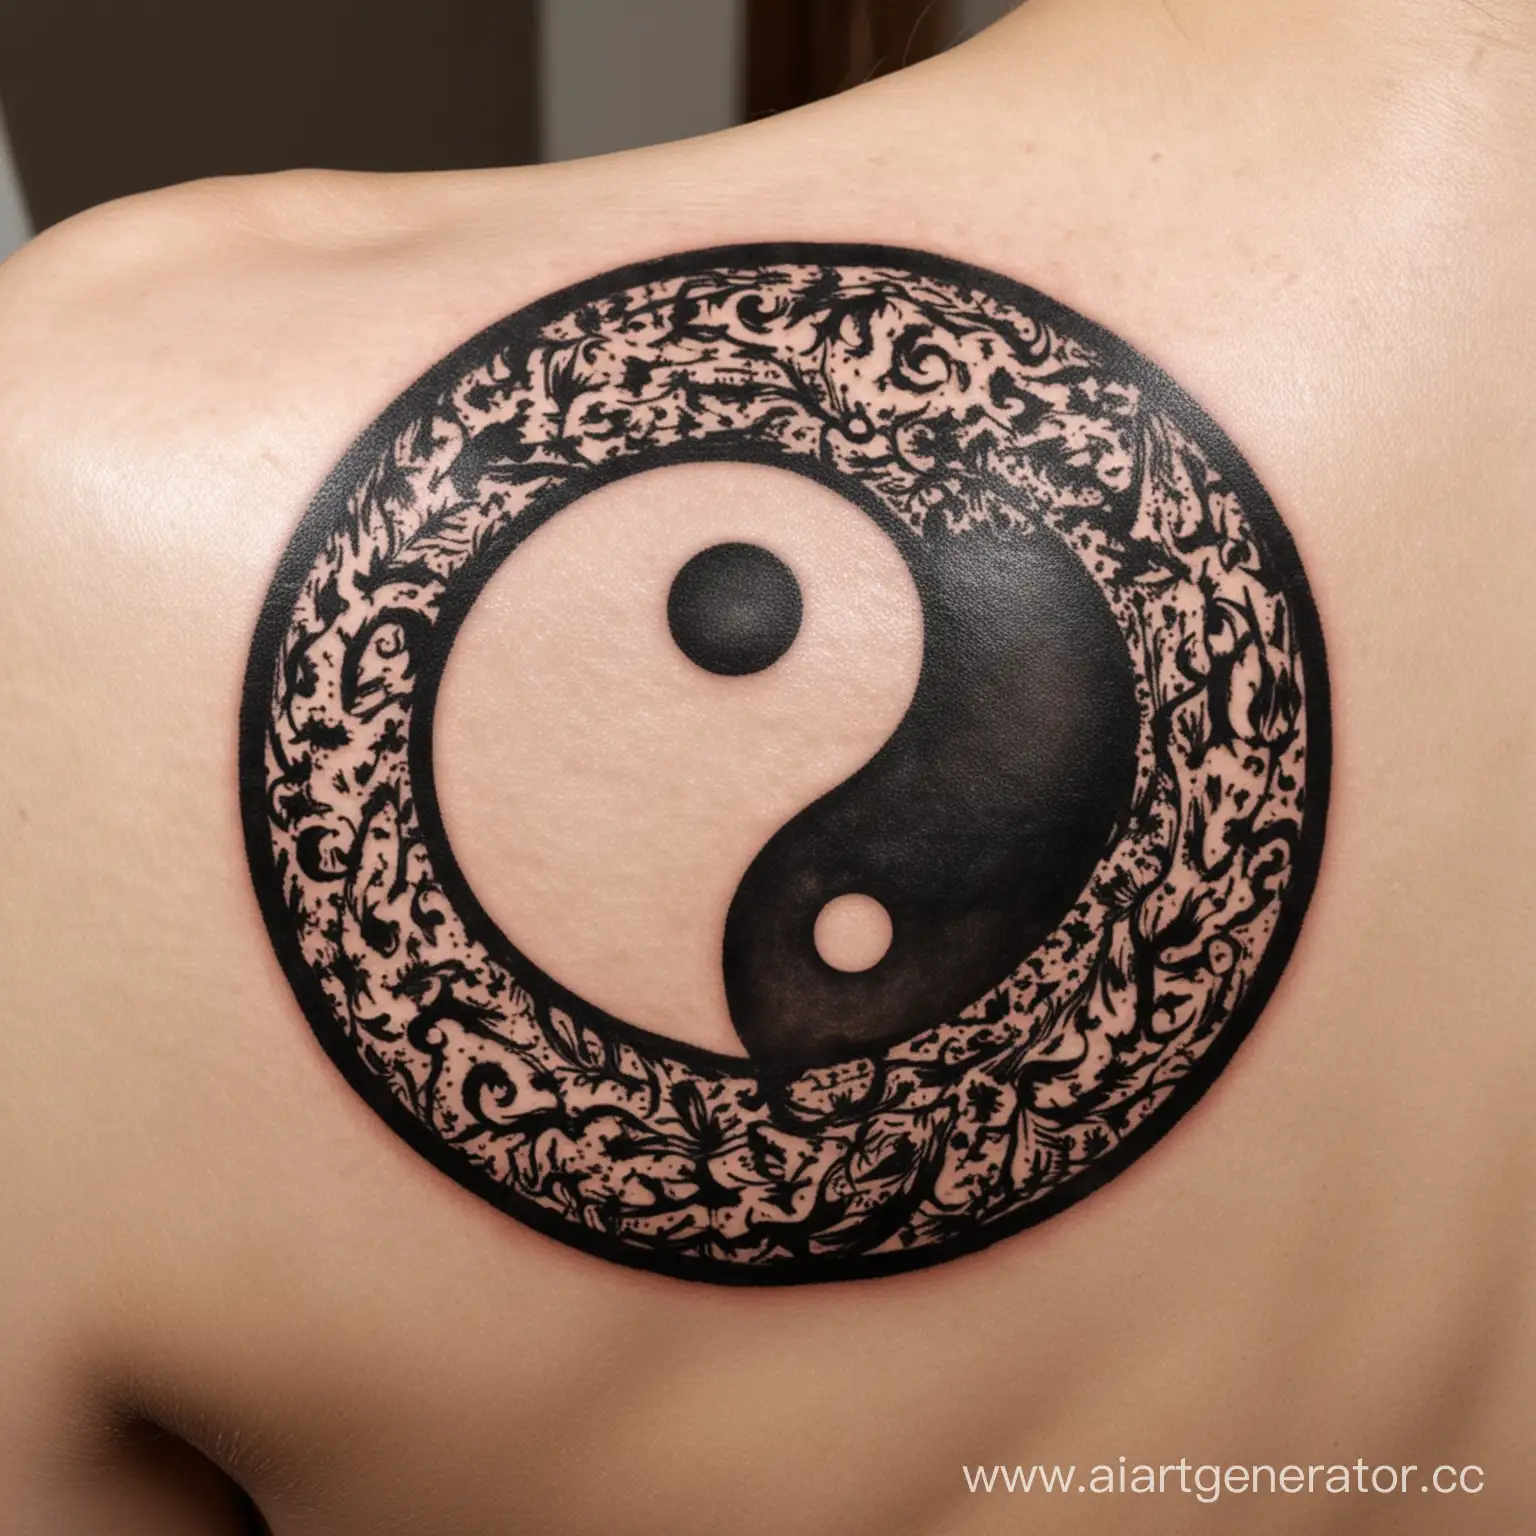 YinYang-Tattoo-Symbolizing-the-Triumph-of-Good-with-Peeling-Black-Half-Revealing-Light-Beneath